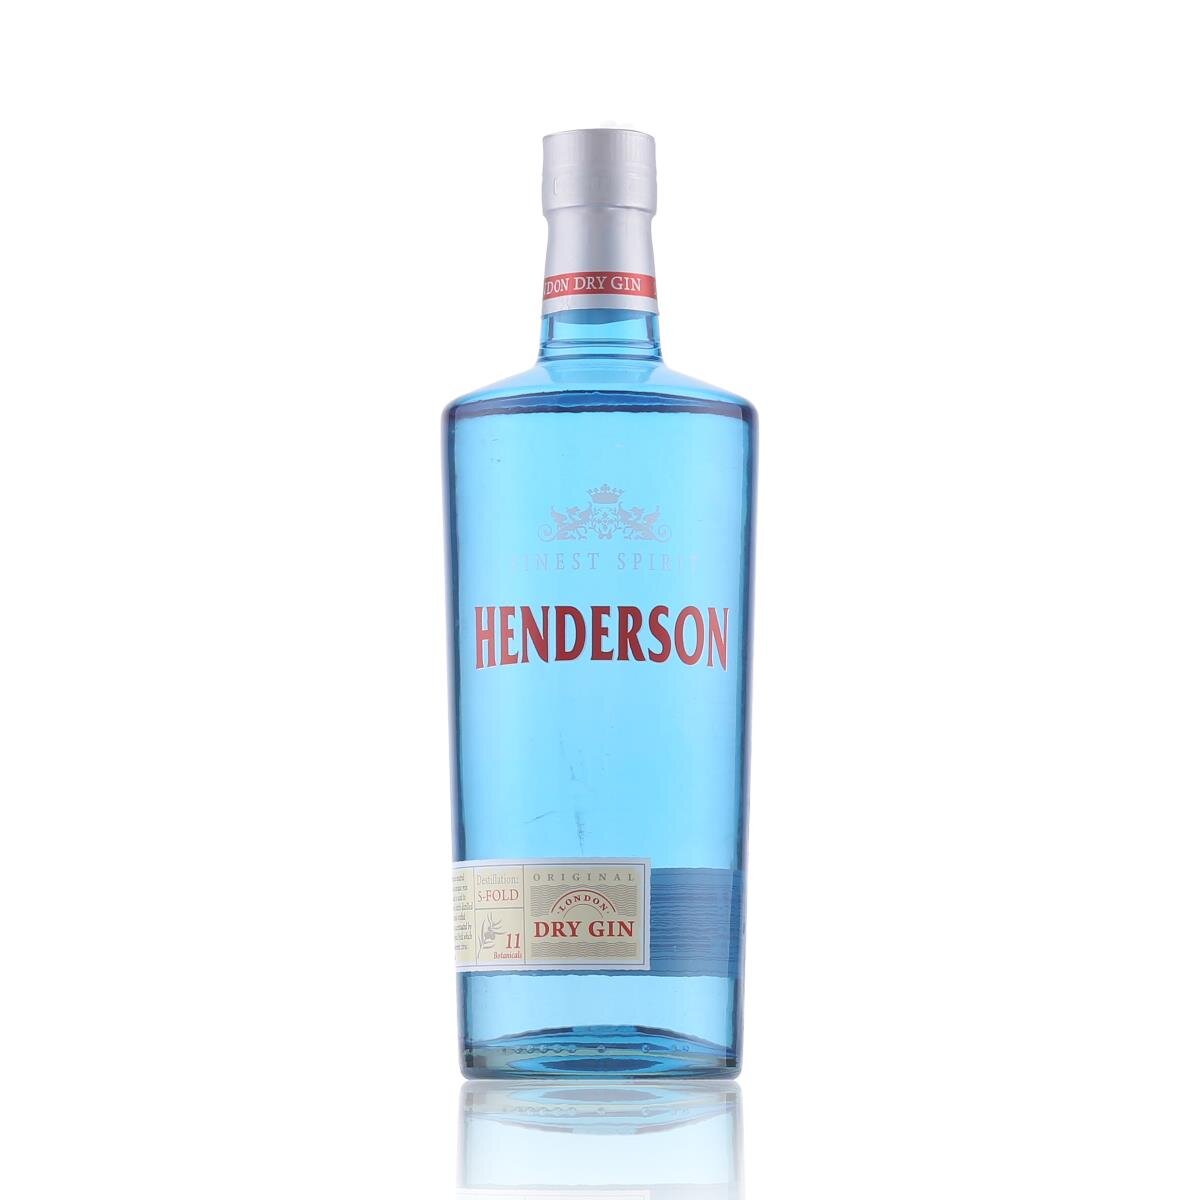 Henderson London Dry 40% 0,7l Gin Vol